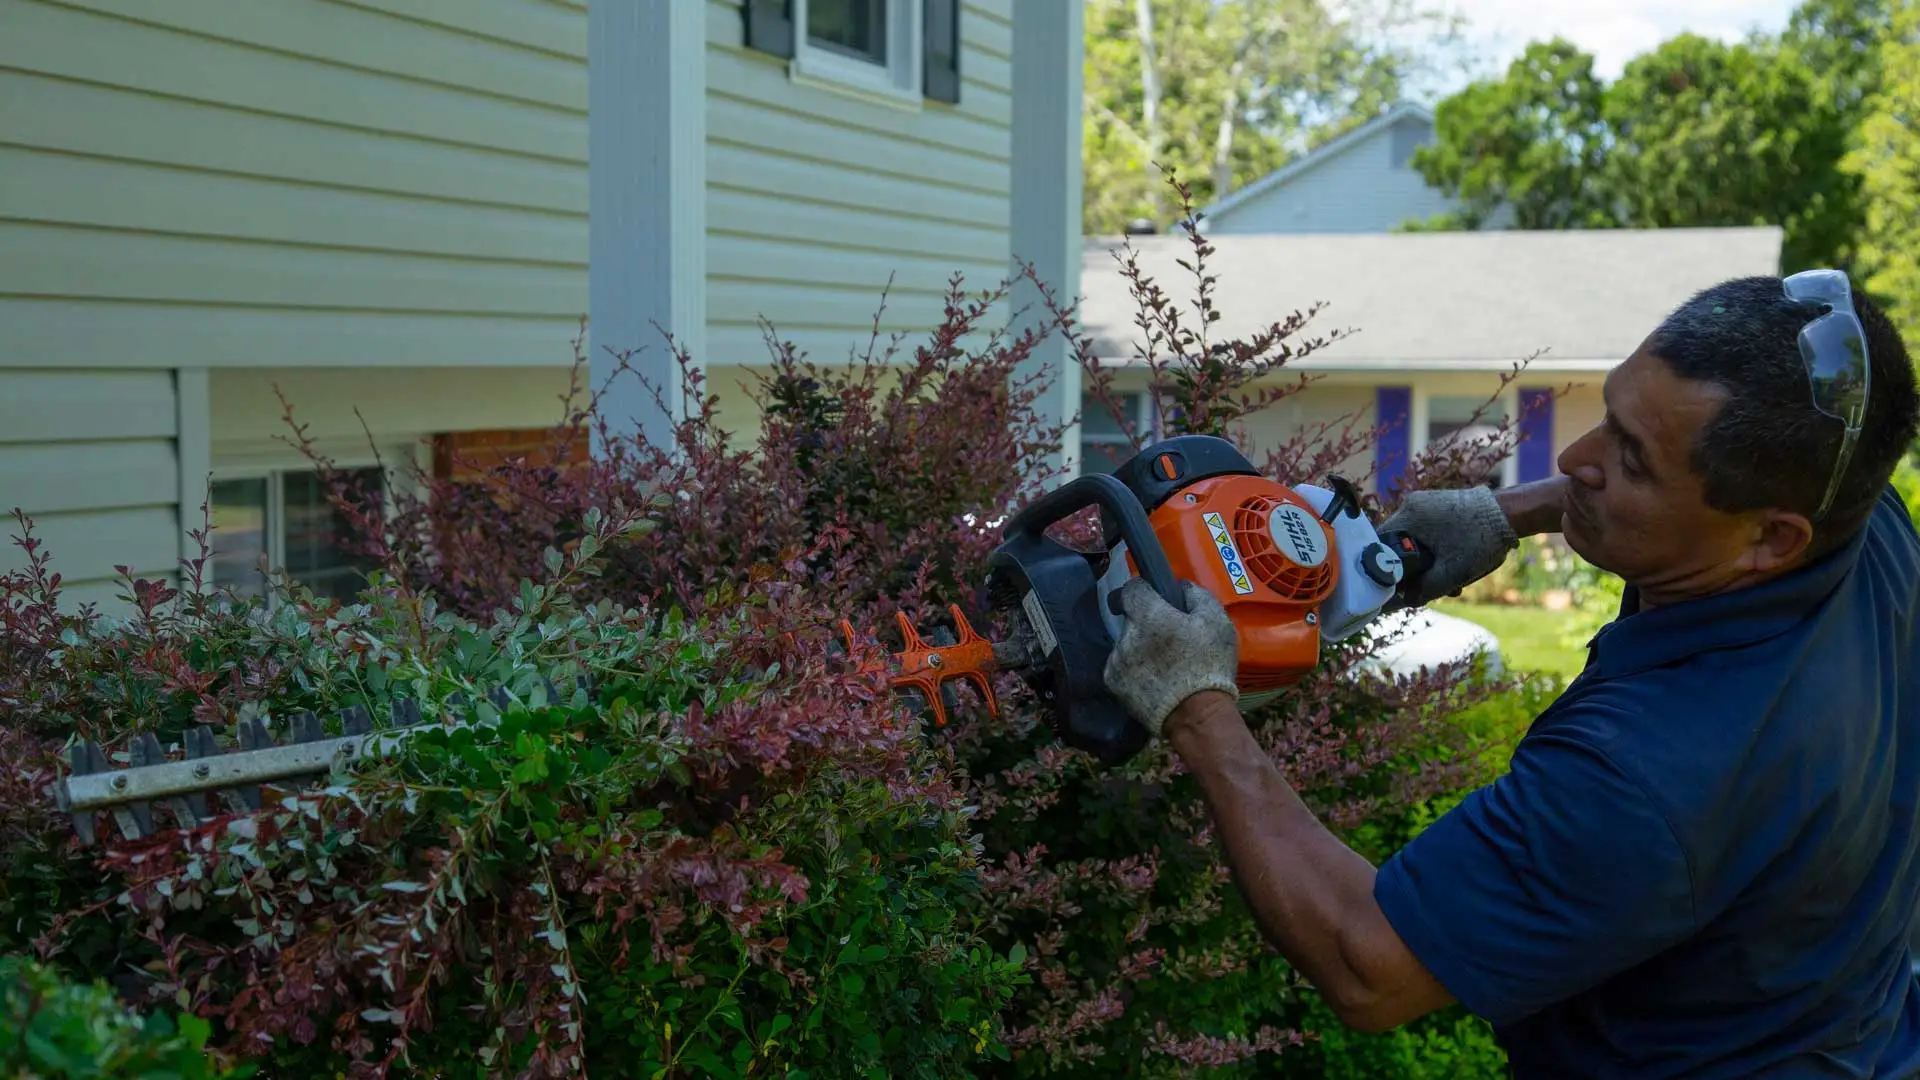 A man is trimming a shrub for a lawn care customer near Arlington, VA.